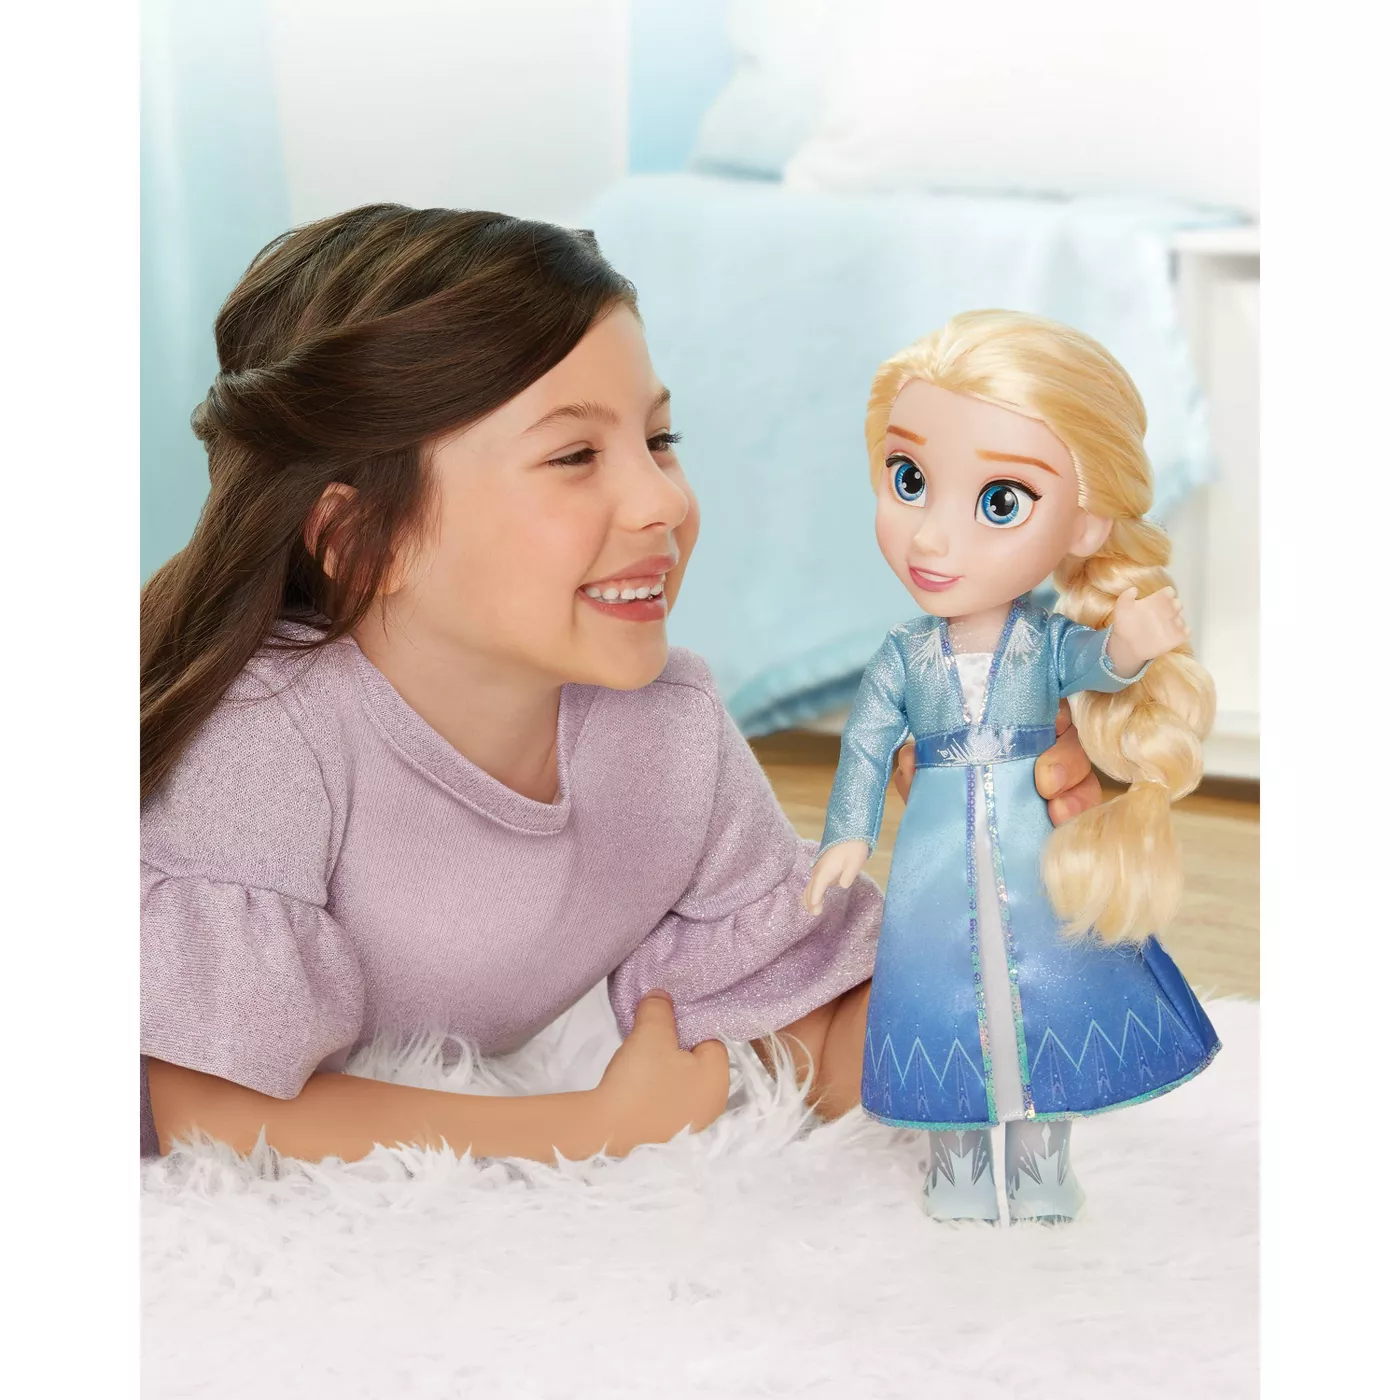 Disney Frozen Singing Elsa Toddler 35.5cm Doll